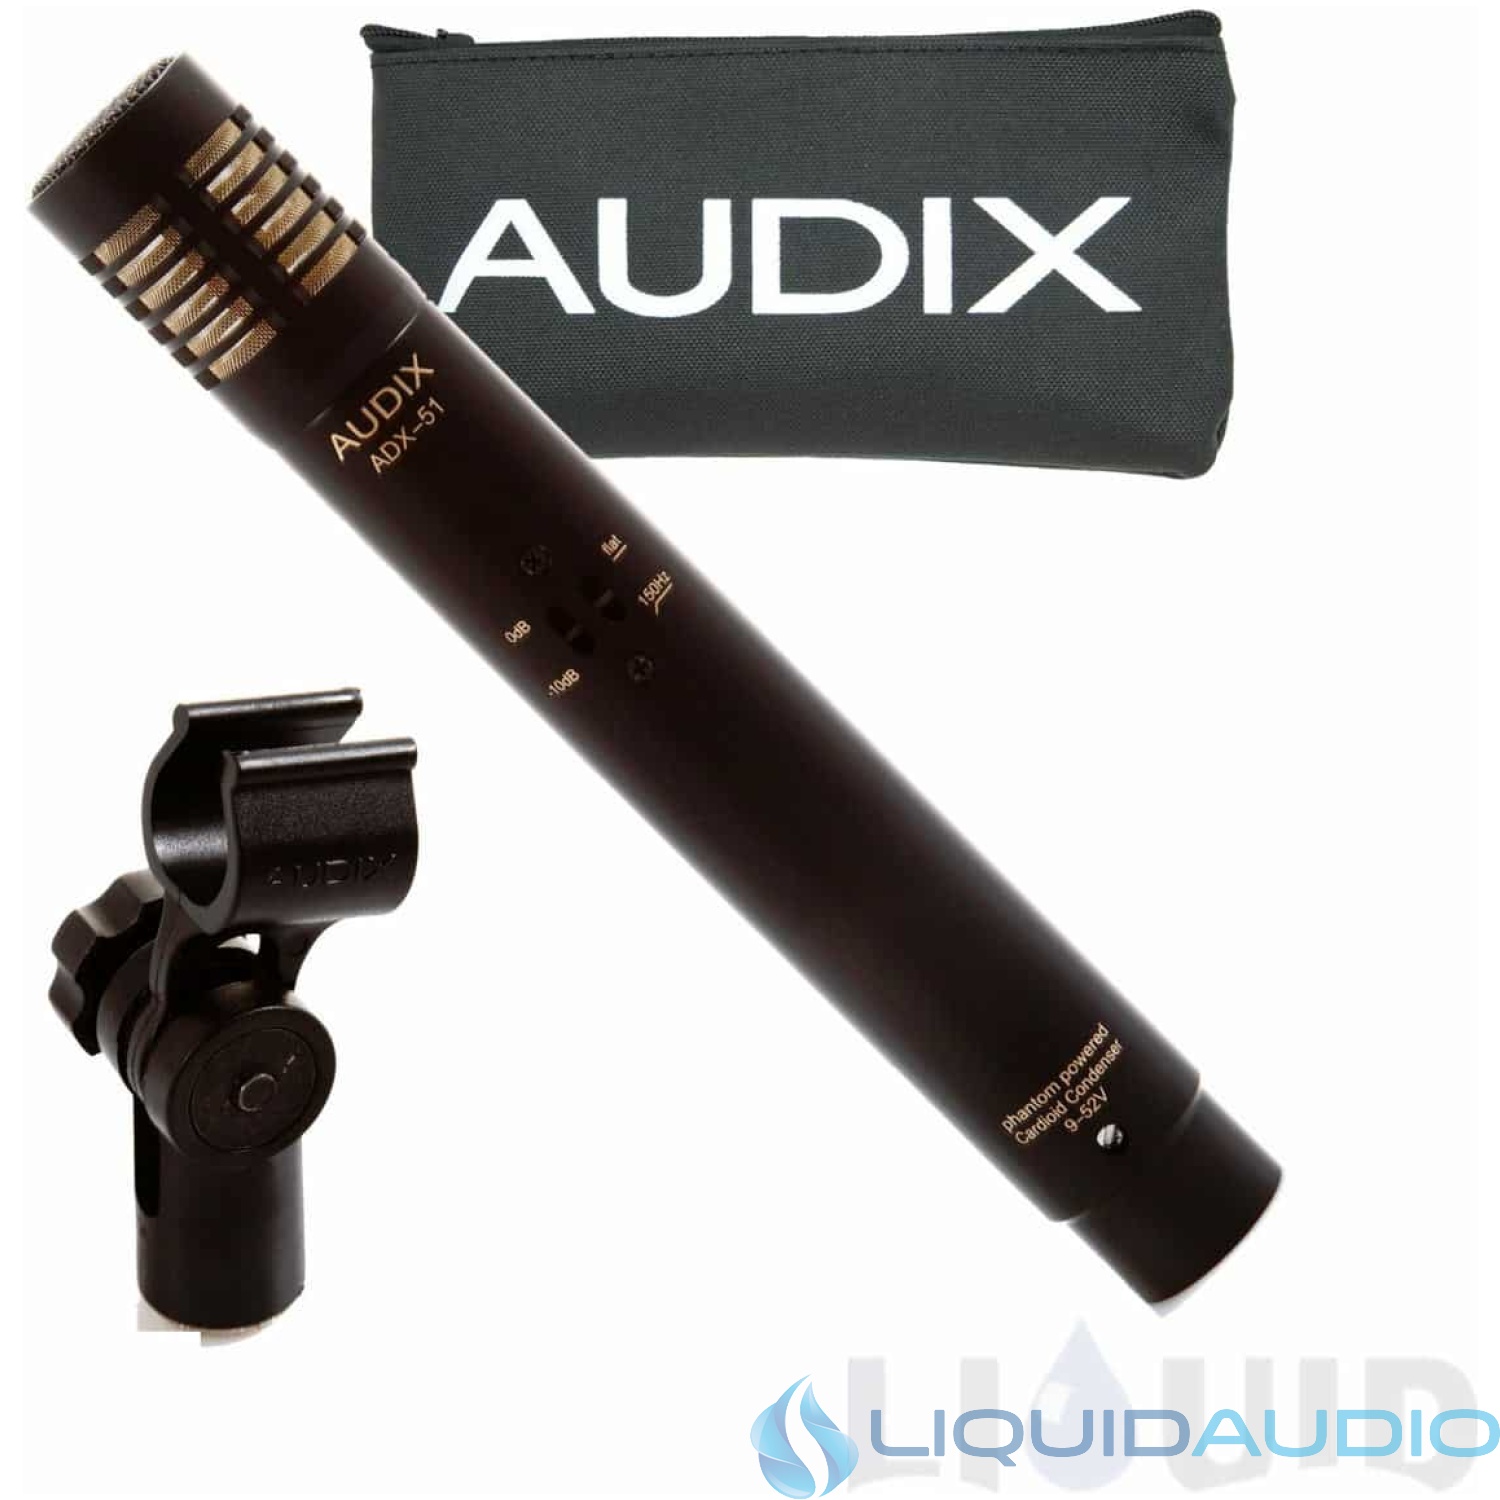 Audix ADX51 Instrument Condenser Microphone